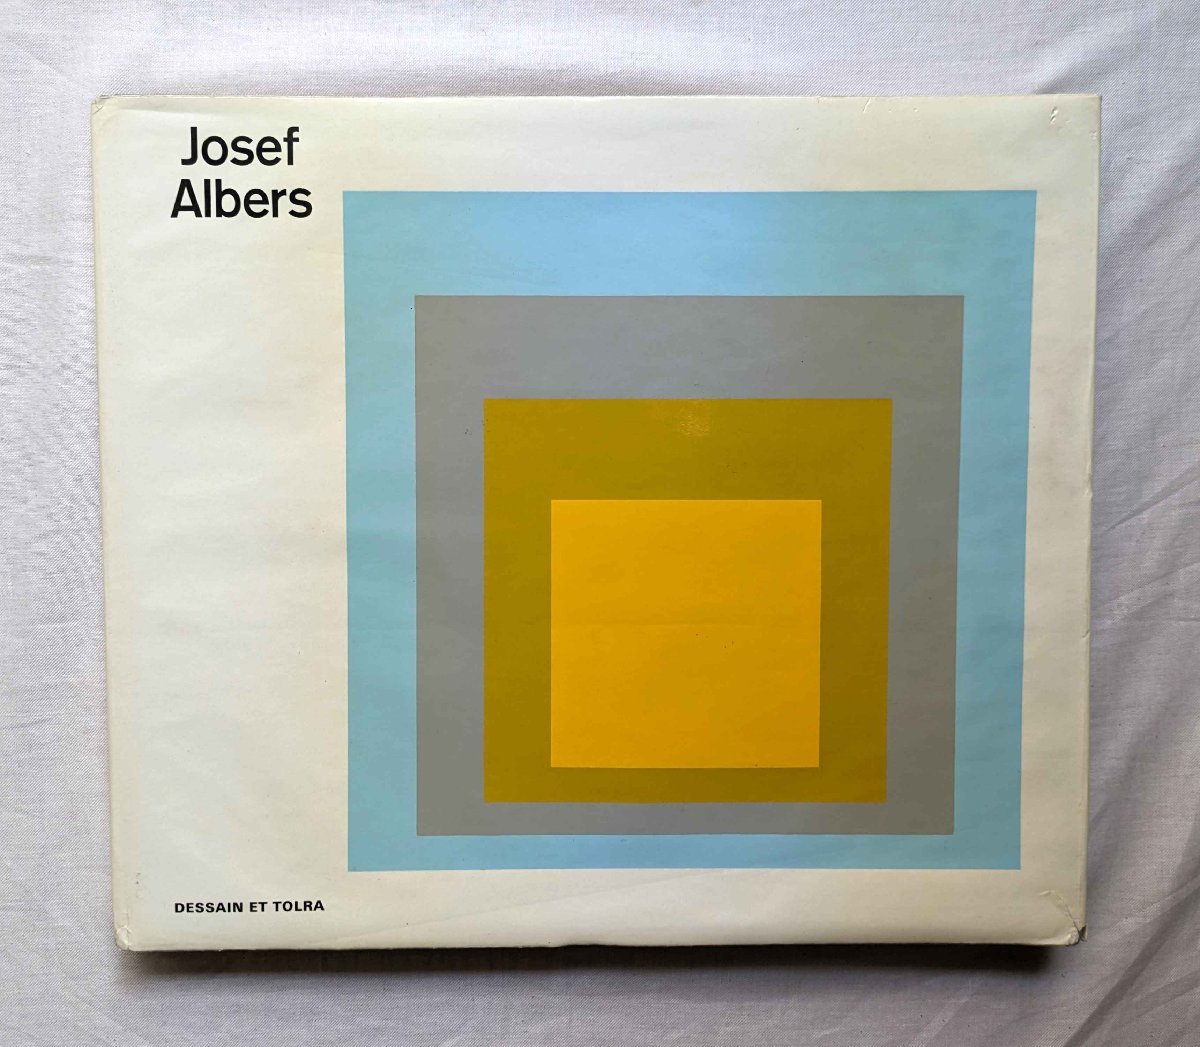 Josef Albers 1972 Josef Albers Dessain et Tolra Eugen Gomringer 第 16 册 丝网印刷品 向方形包豪斯致敬, 绘画, 画集, 美术书, 收藏, 画集, 美术书